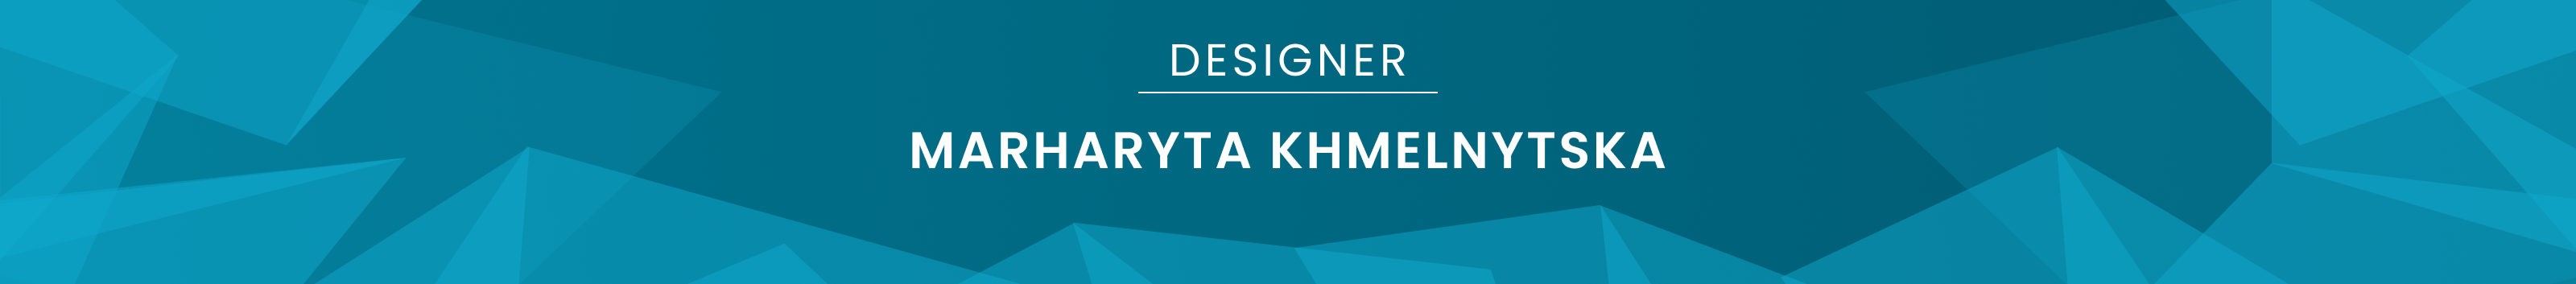 Marharyta Khmelnytska's profile banner